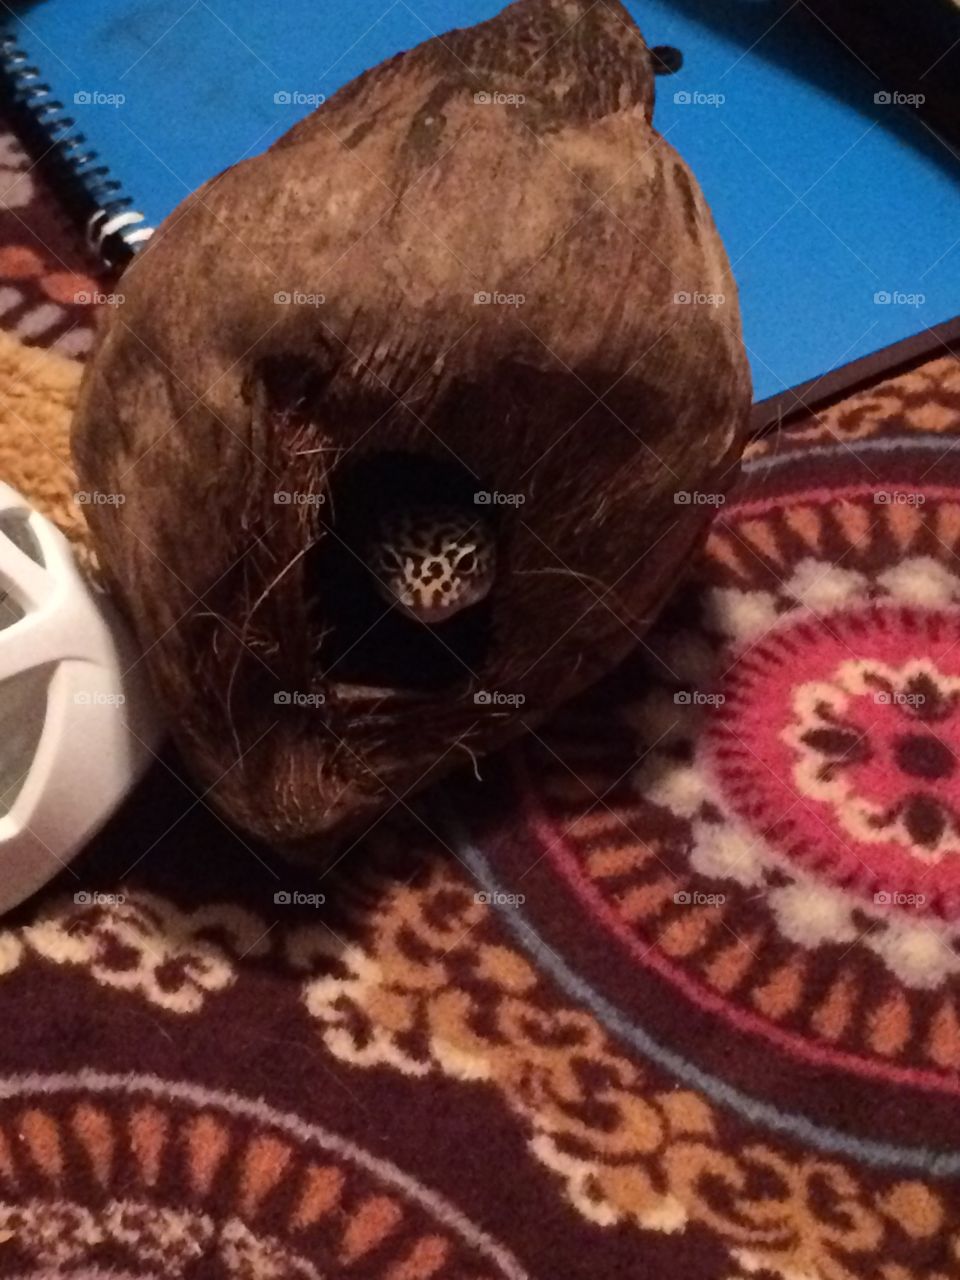 Coconut head